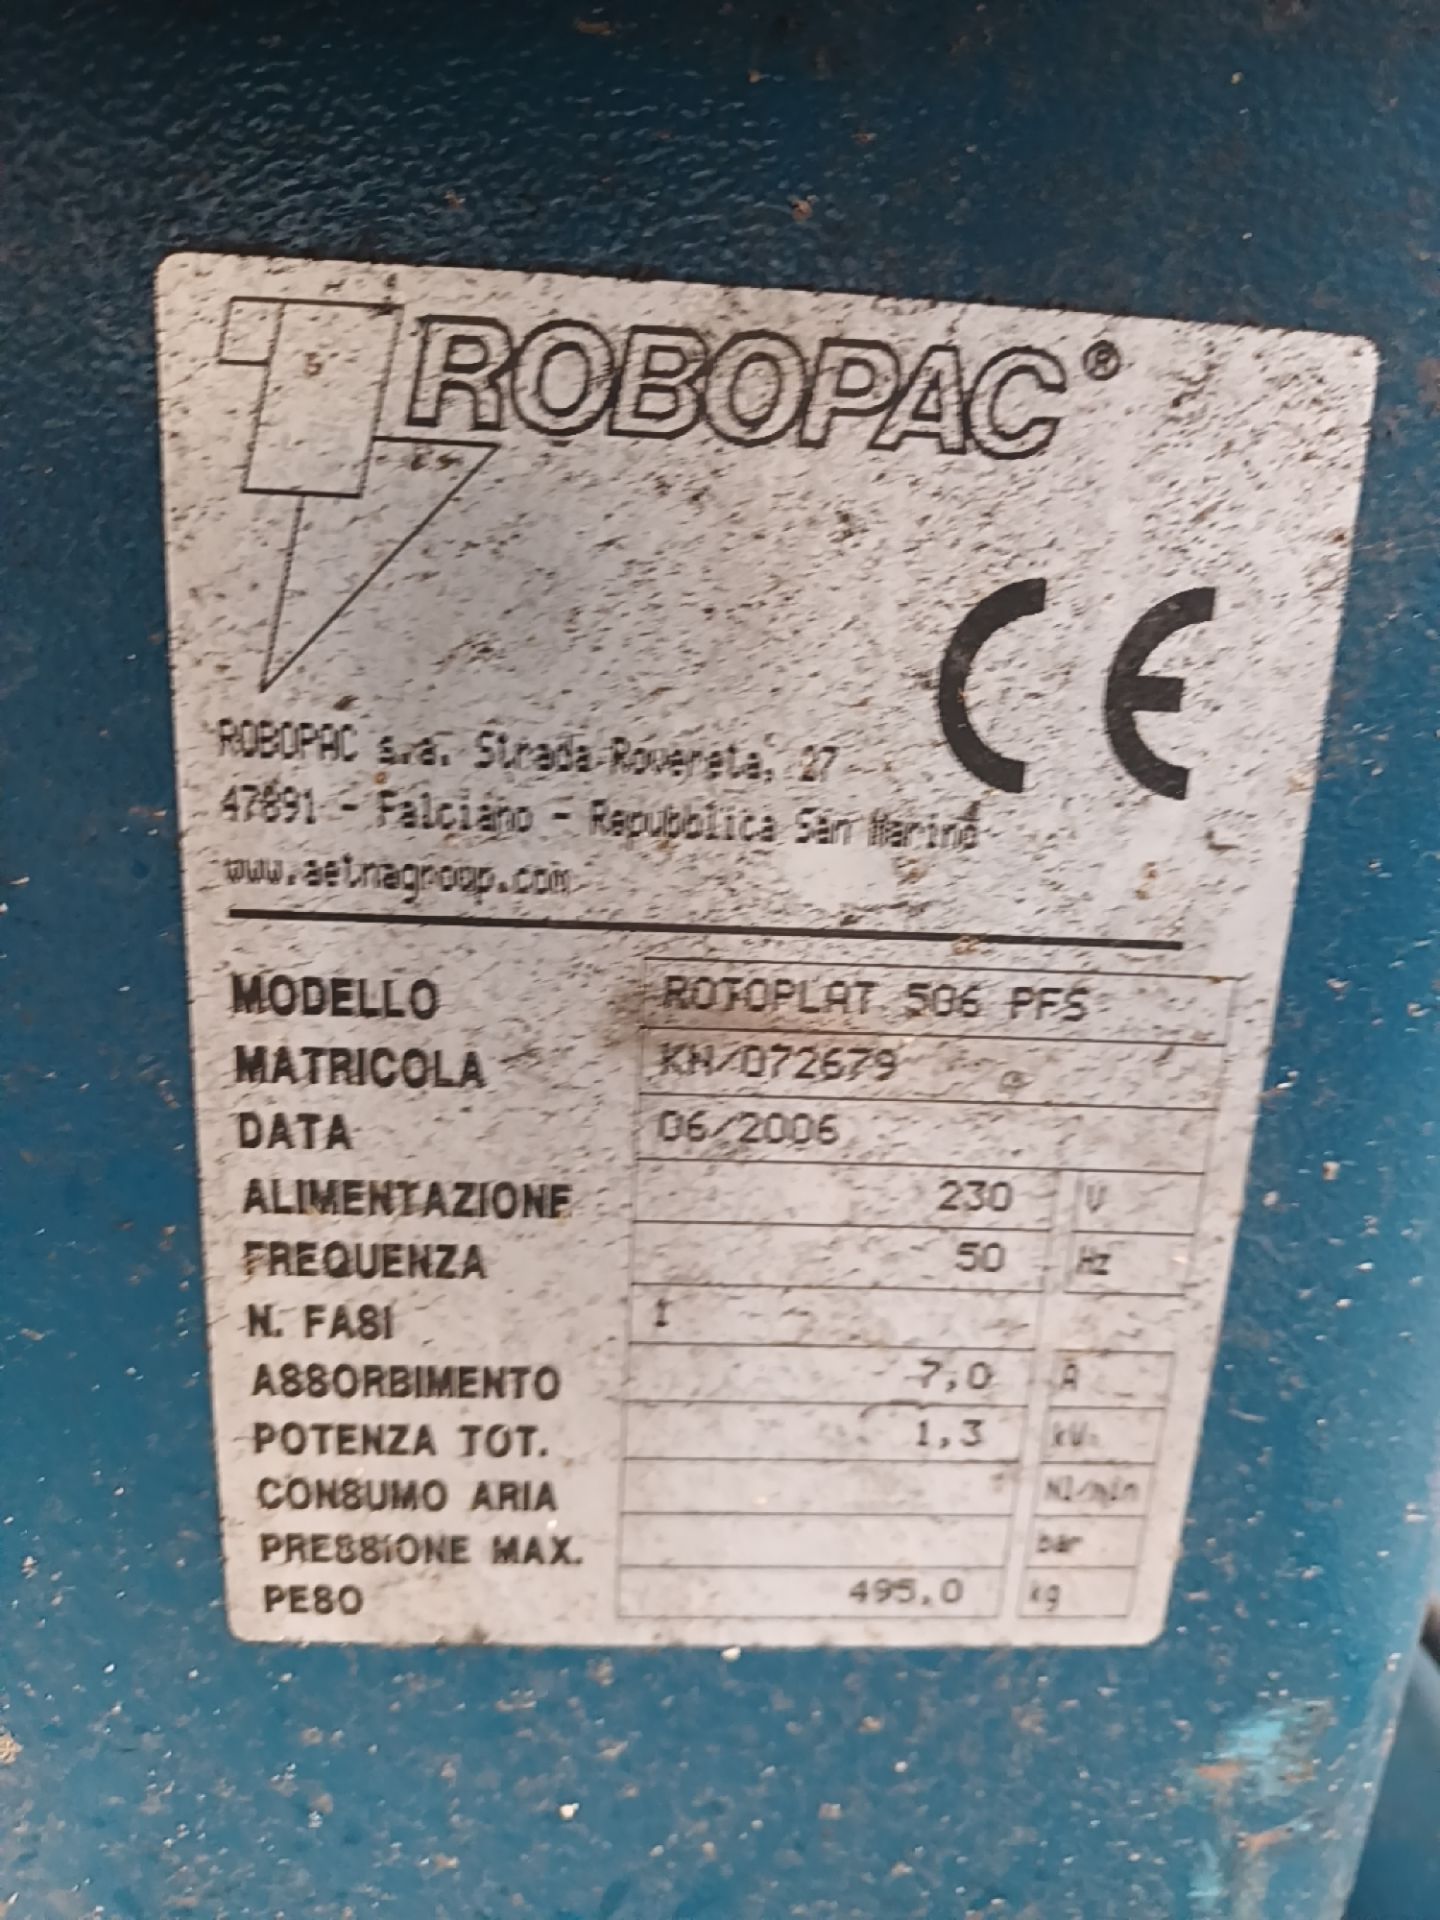 ROBOPAC shrink pallet wrapper (2006), model ROTOPLAT 506 PFS, Serial No. KN/072679 - Bild 4 aus 6